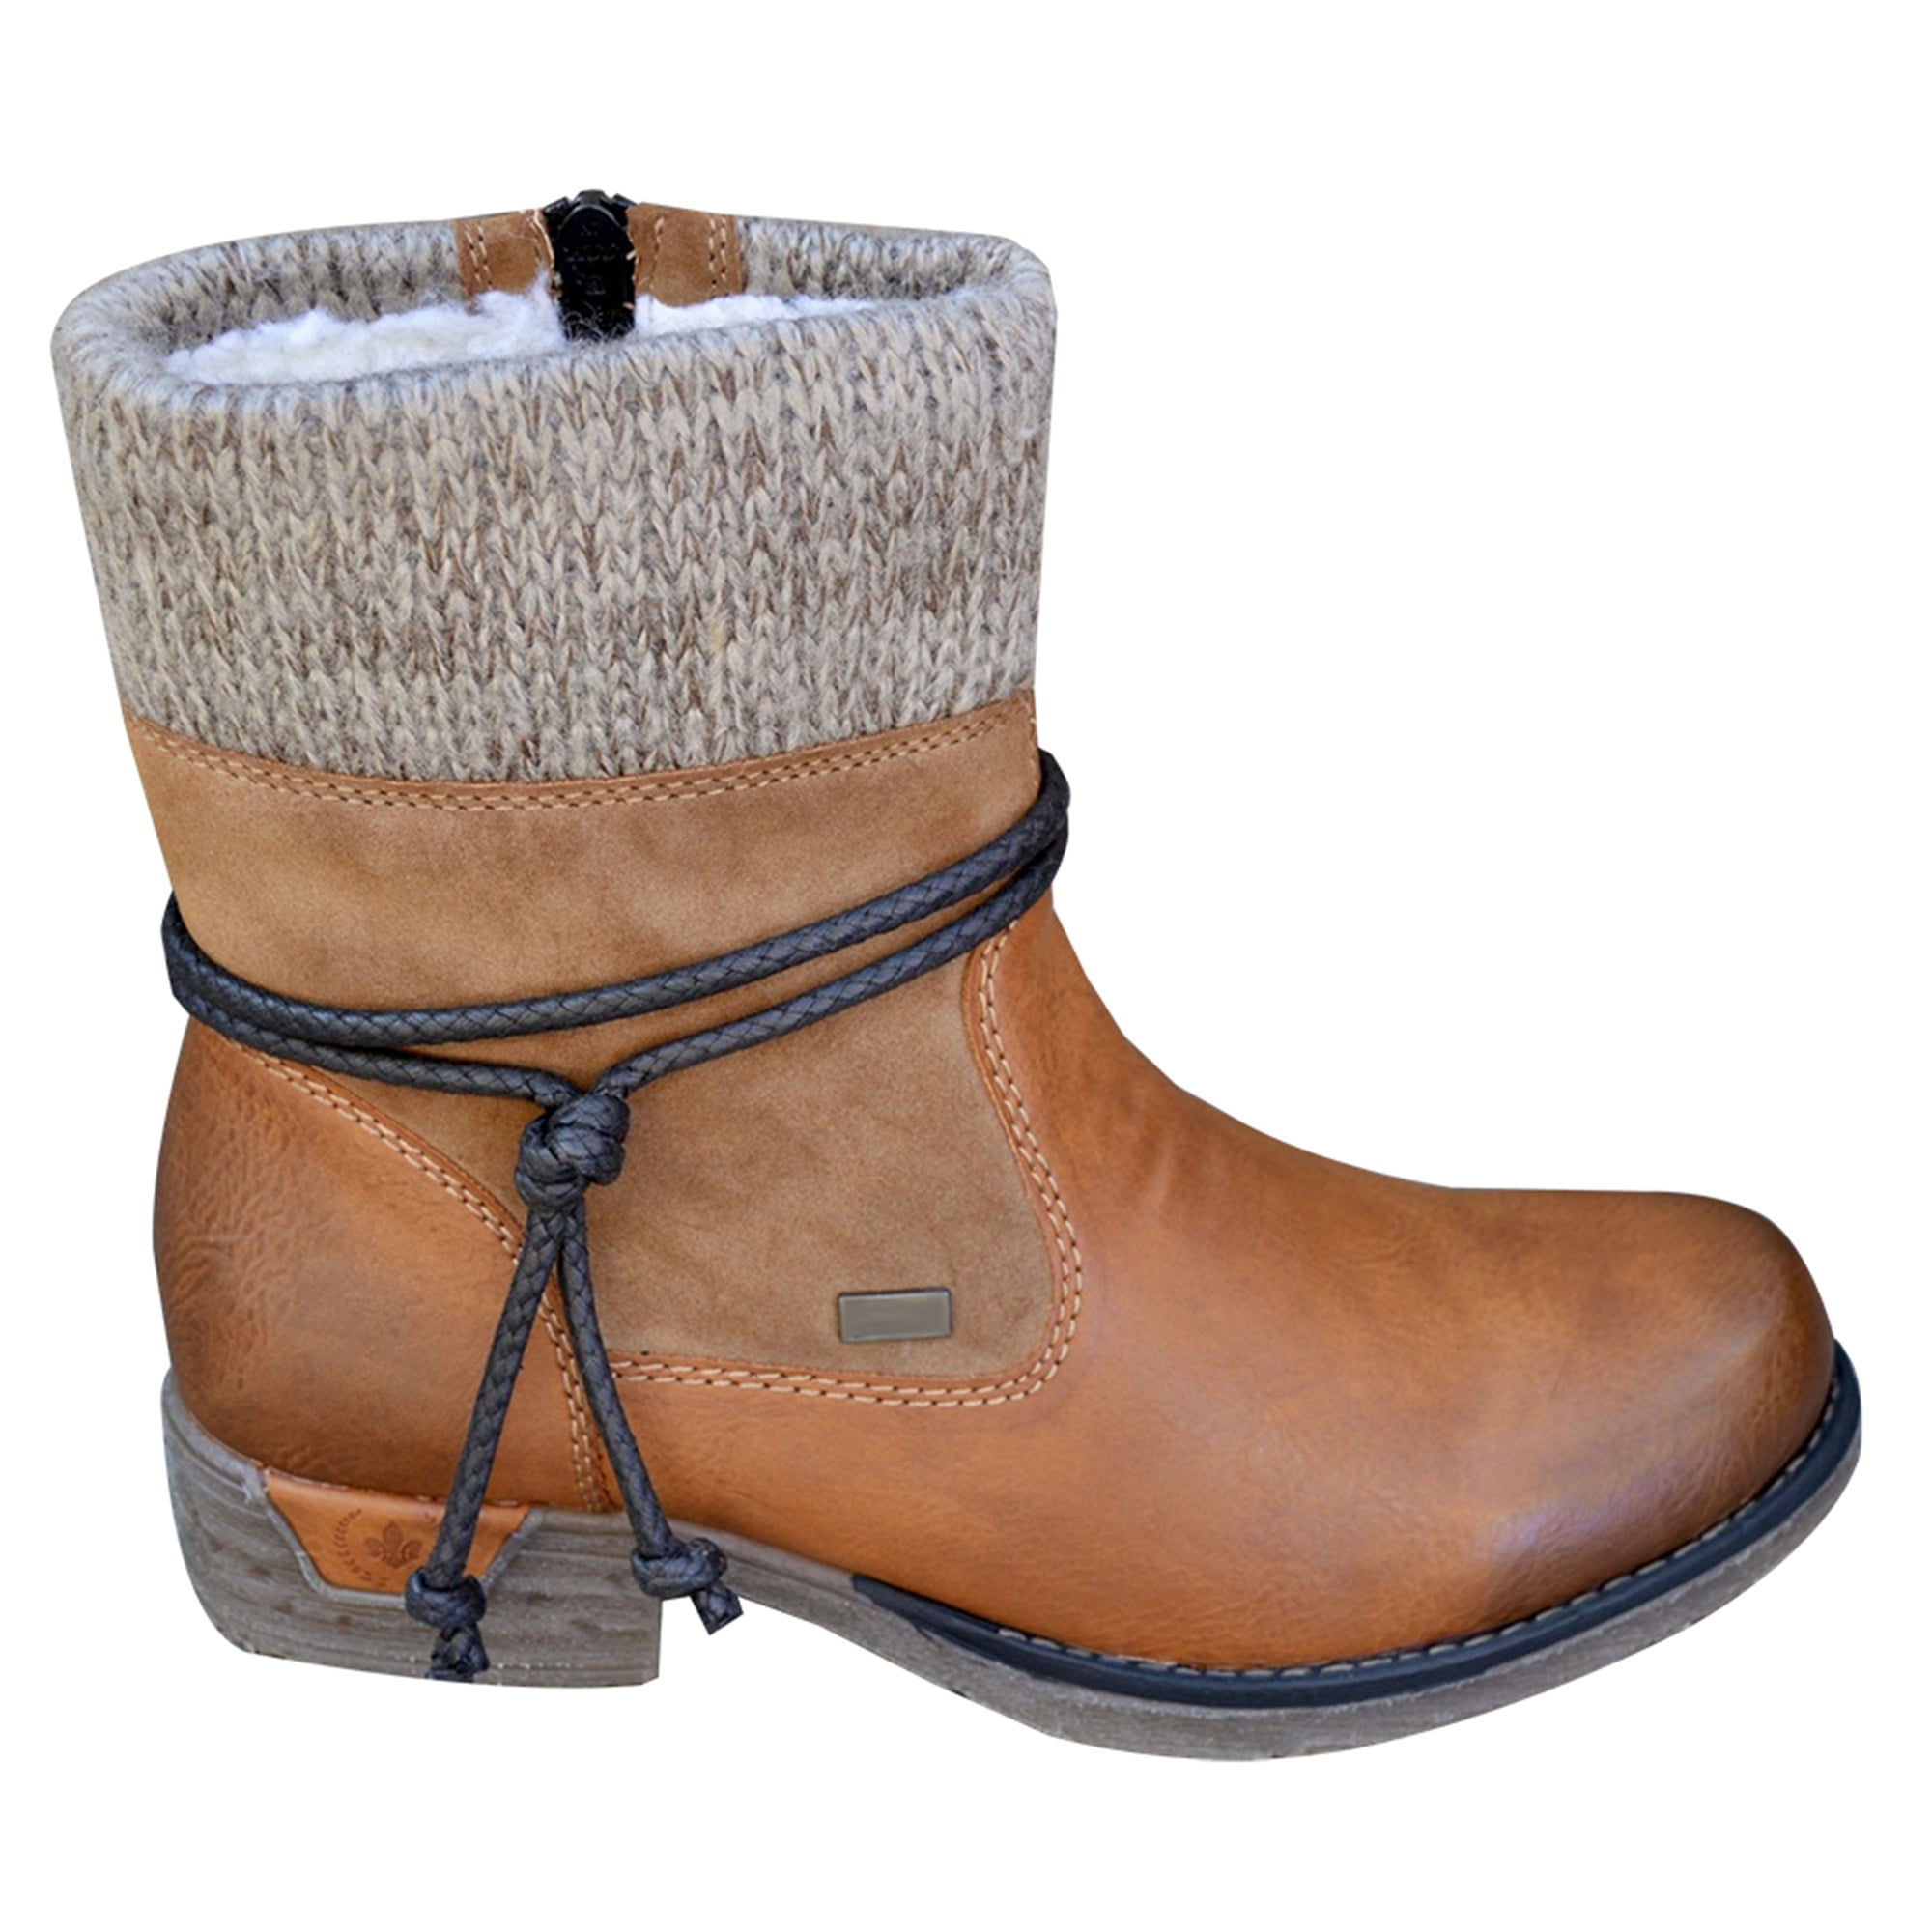 Ren deformation skøjte FEIOS Women Fleece Lined Ankle Boots Winter Warm Low Block Heel Booties  Camel - Walmart.com